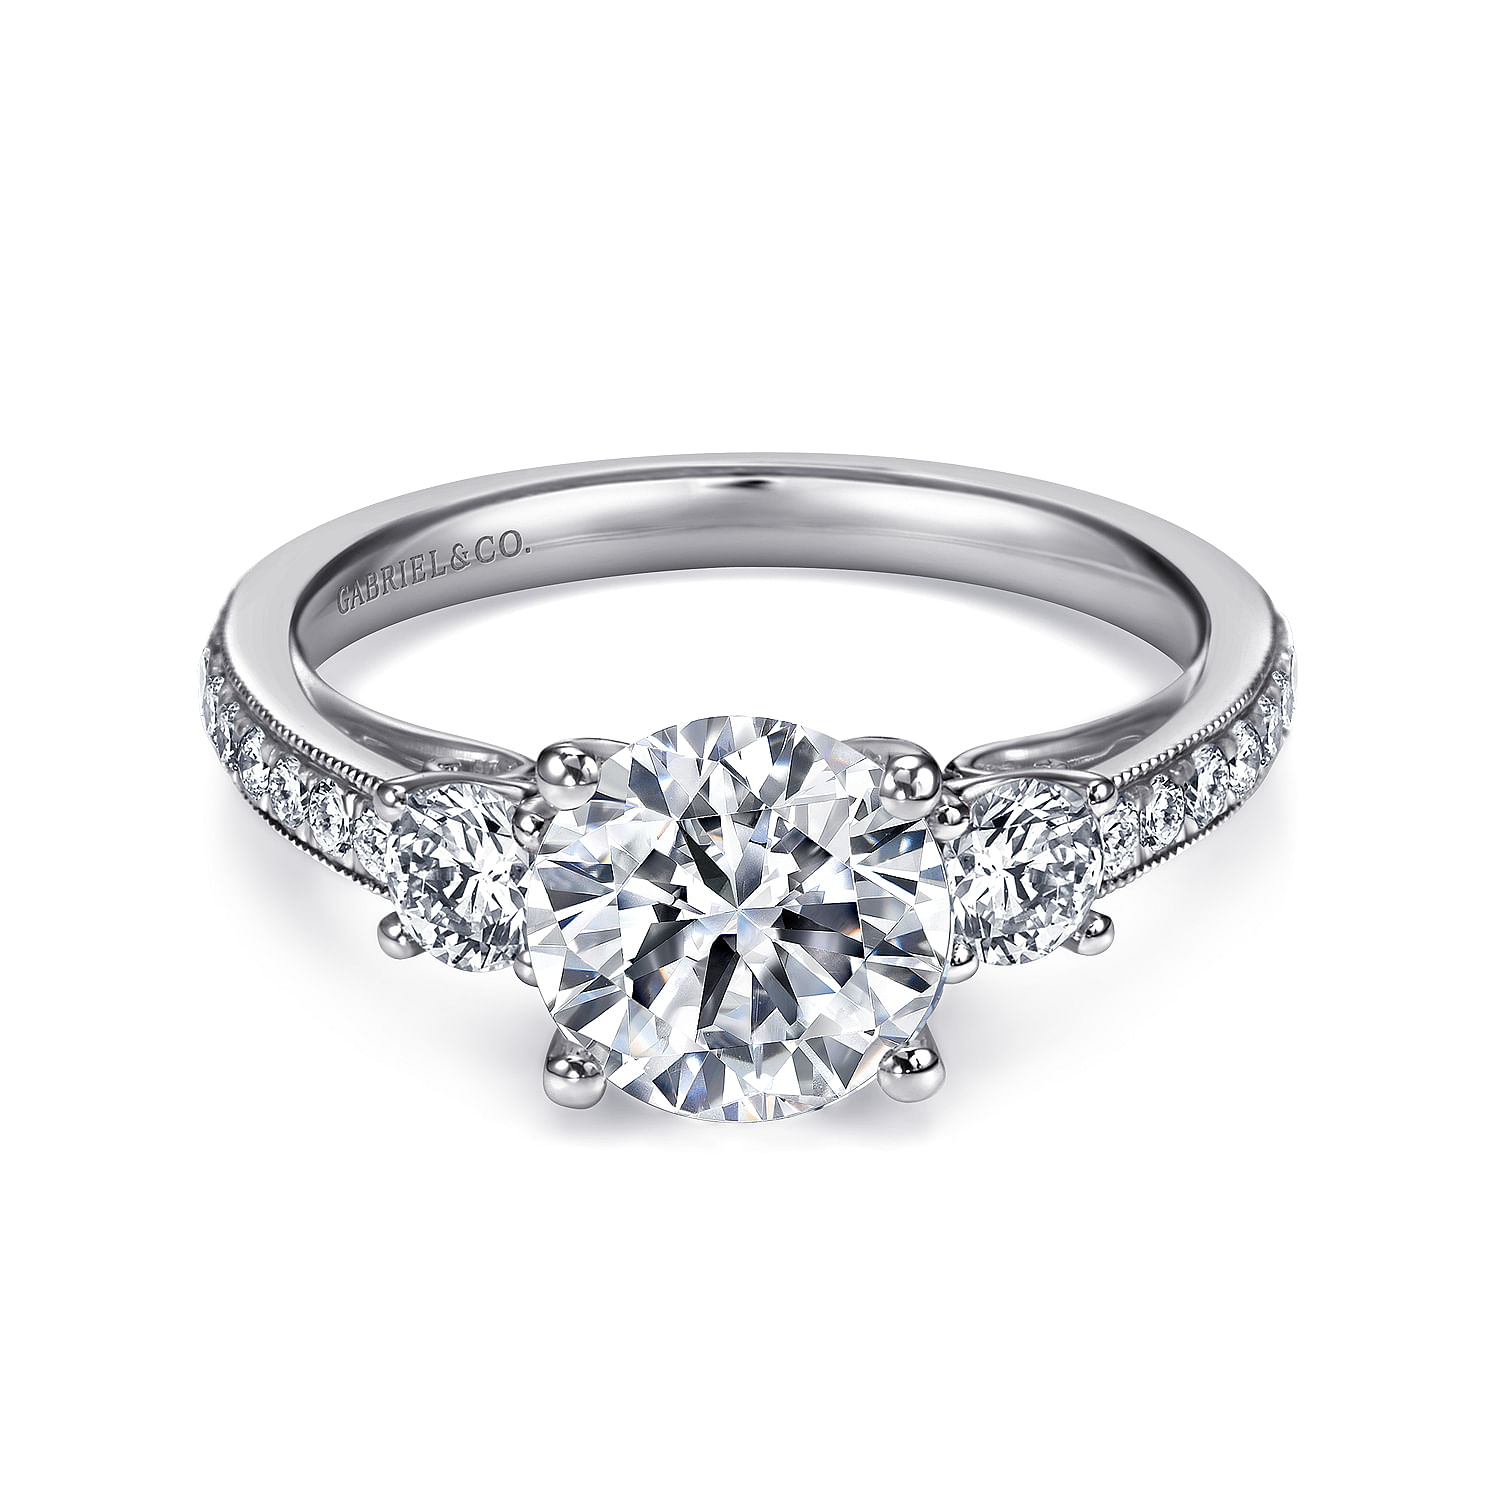 Rory - Vintage Inspired 14K White Gold Round Three Stone Diamond Engagement Ring